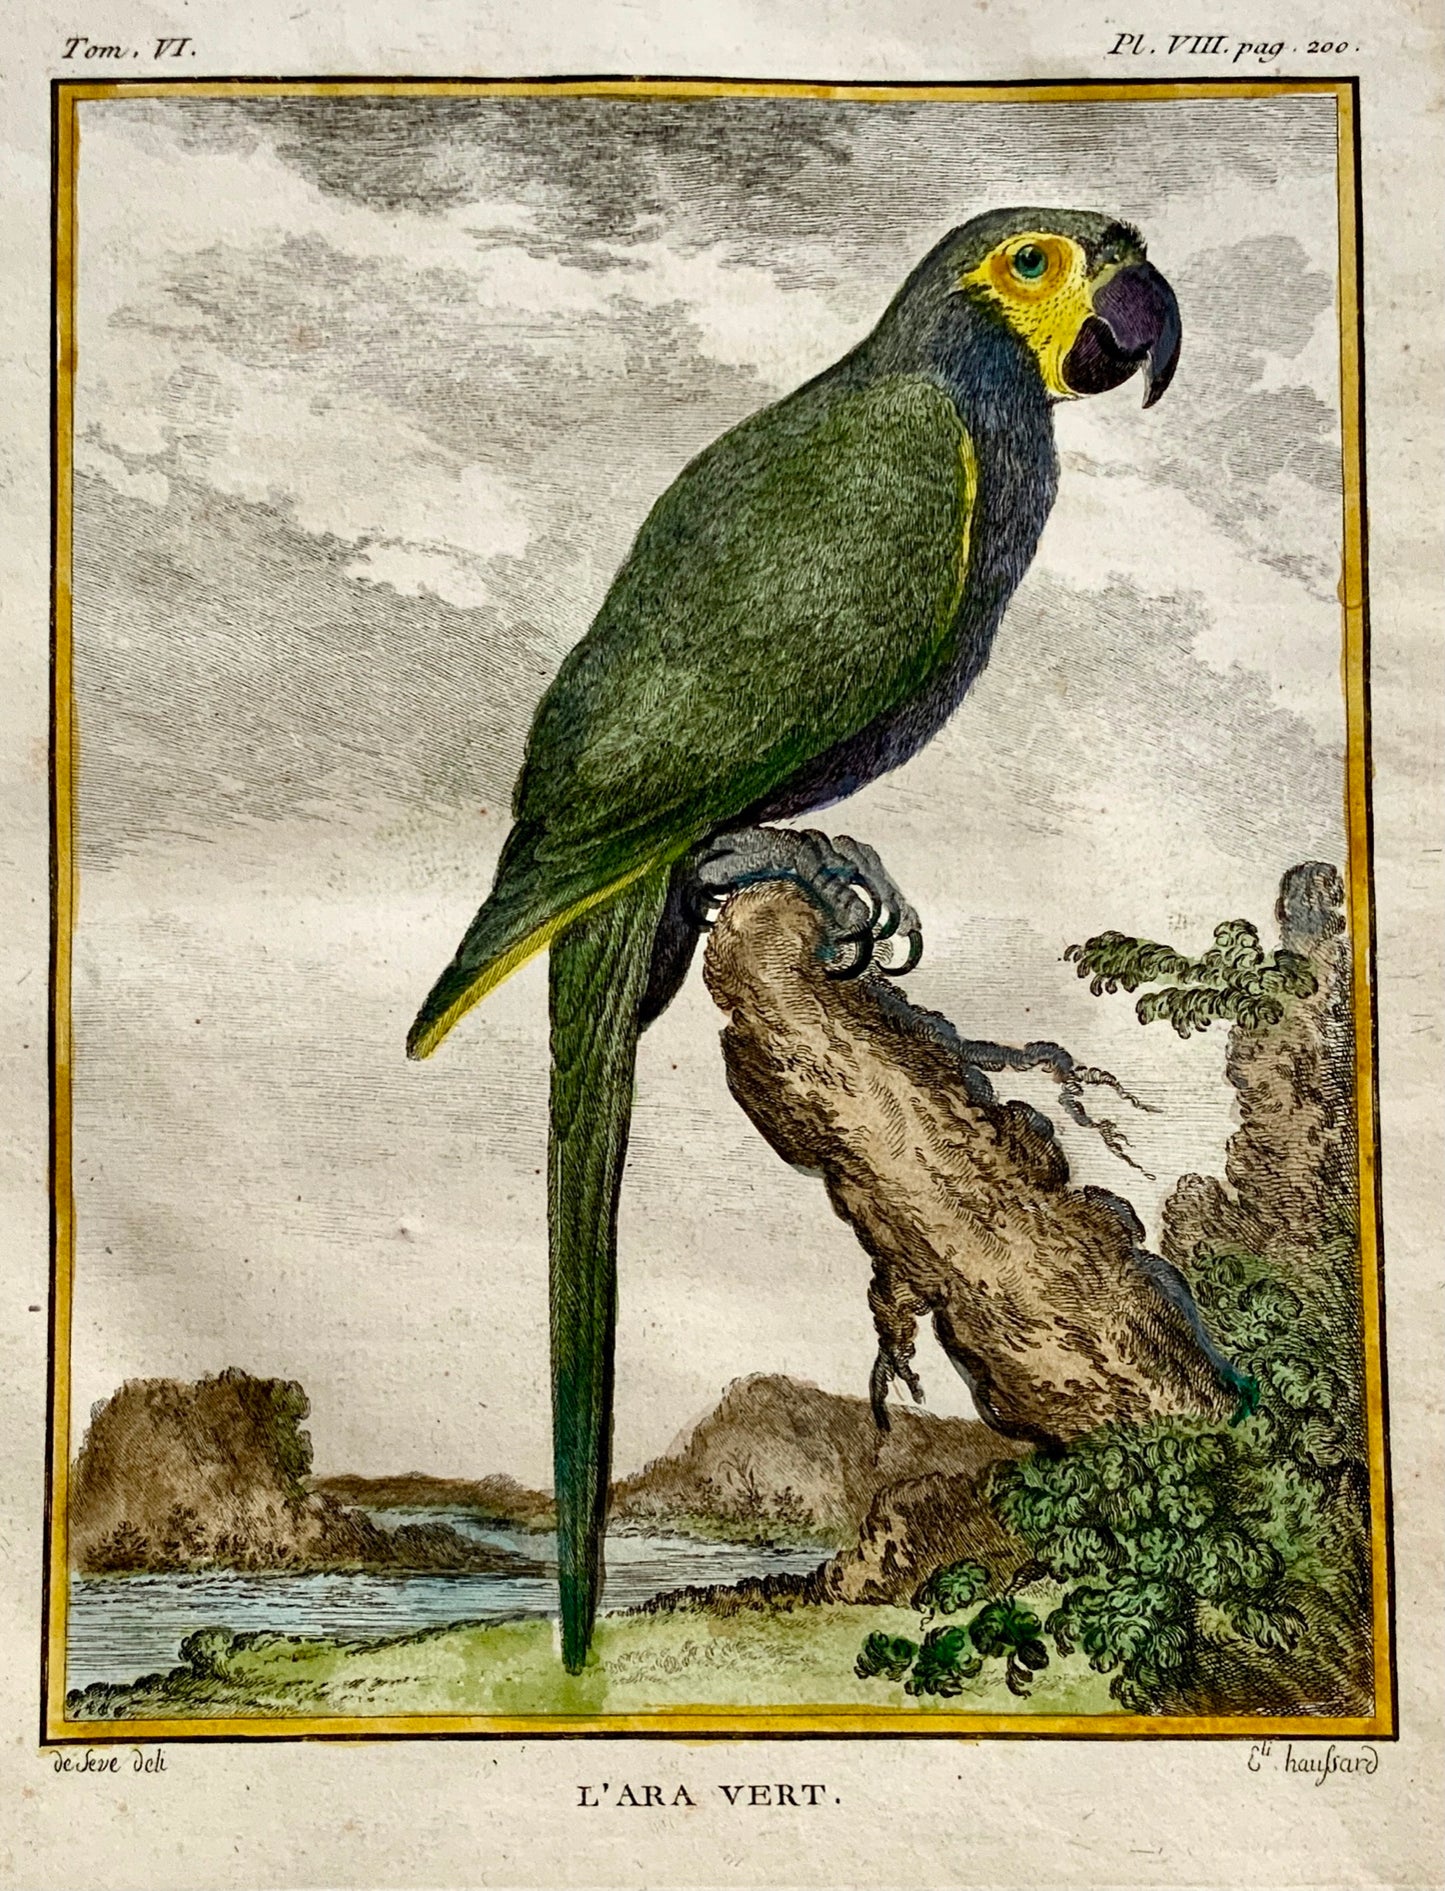 1779 Haussard after Jacques de Seve - L’Ara Vert - Parrot - 4to engraving - Ornithology